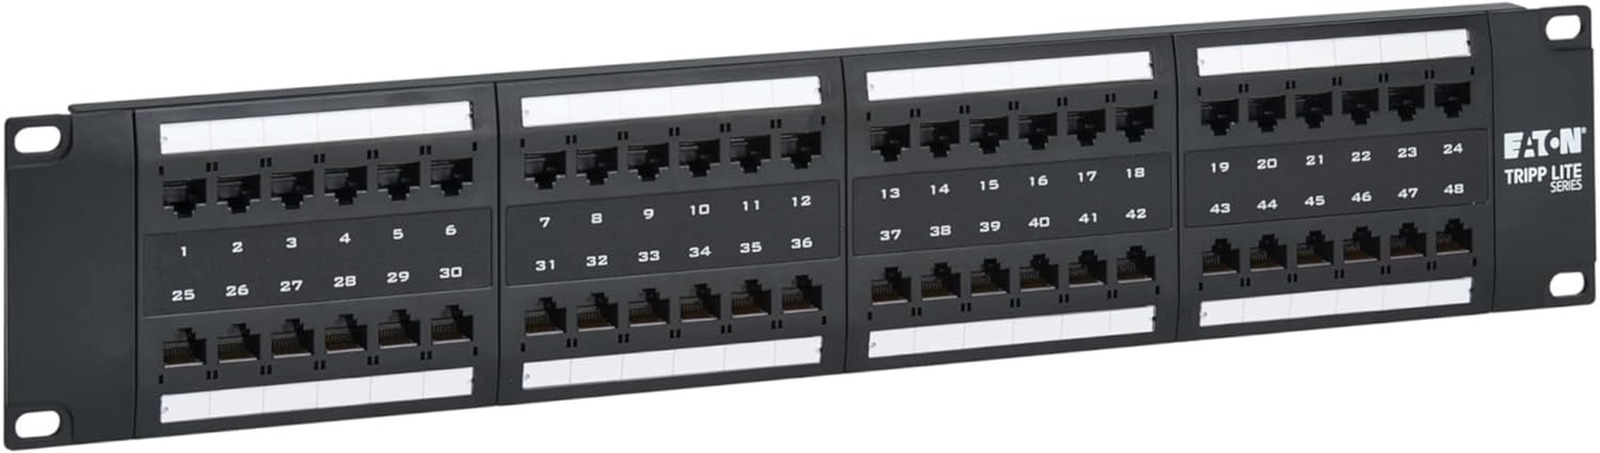 Eaton Tripp Lite Cat6 24-Port Poe+ Patch Panel, RJ45 Ethernet, 1U Rackmount, EI